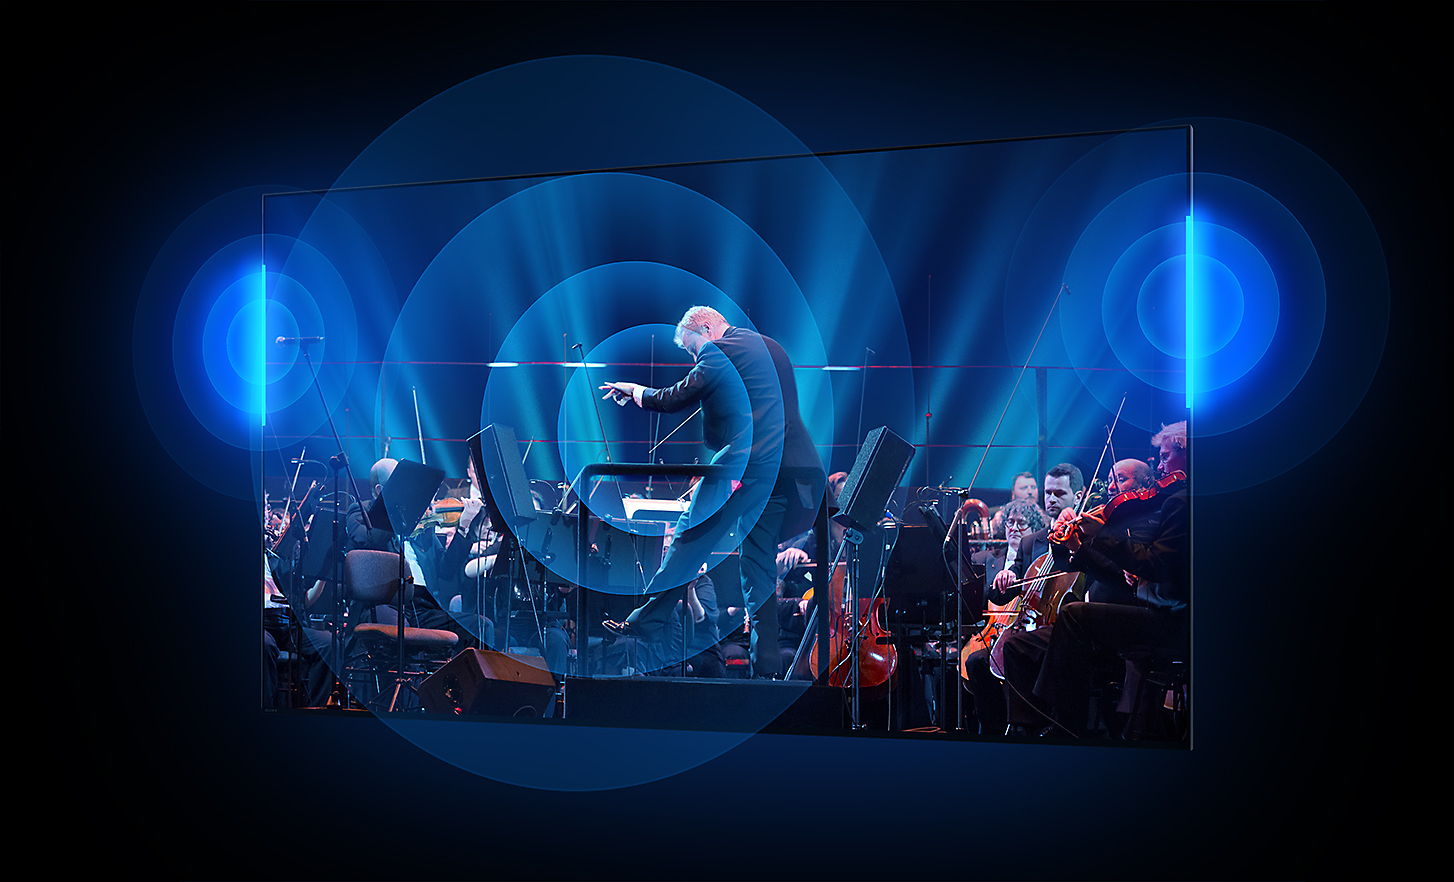 Layar BRAVIA TV memperlihatkan dirigen dan orkestra dengan gelombang suara memancar dalam lingkaran konsentris dari tengah layar